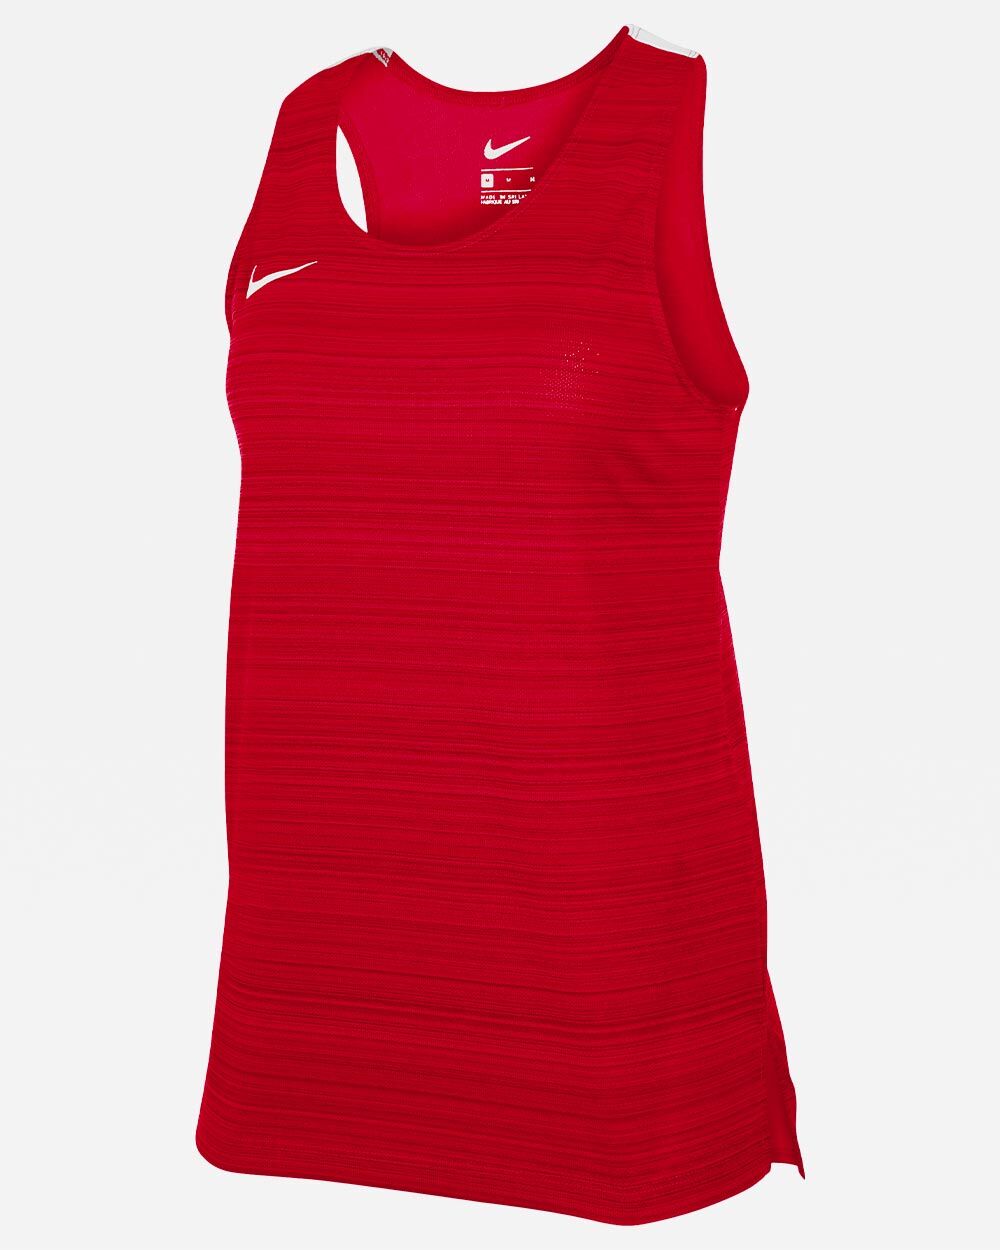 Camiseta sin mangas de running Nike Stock Rojo Mujeres - NT0301-657